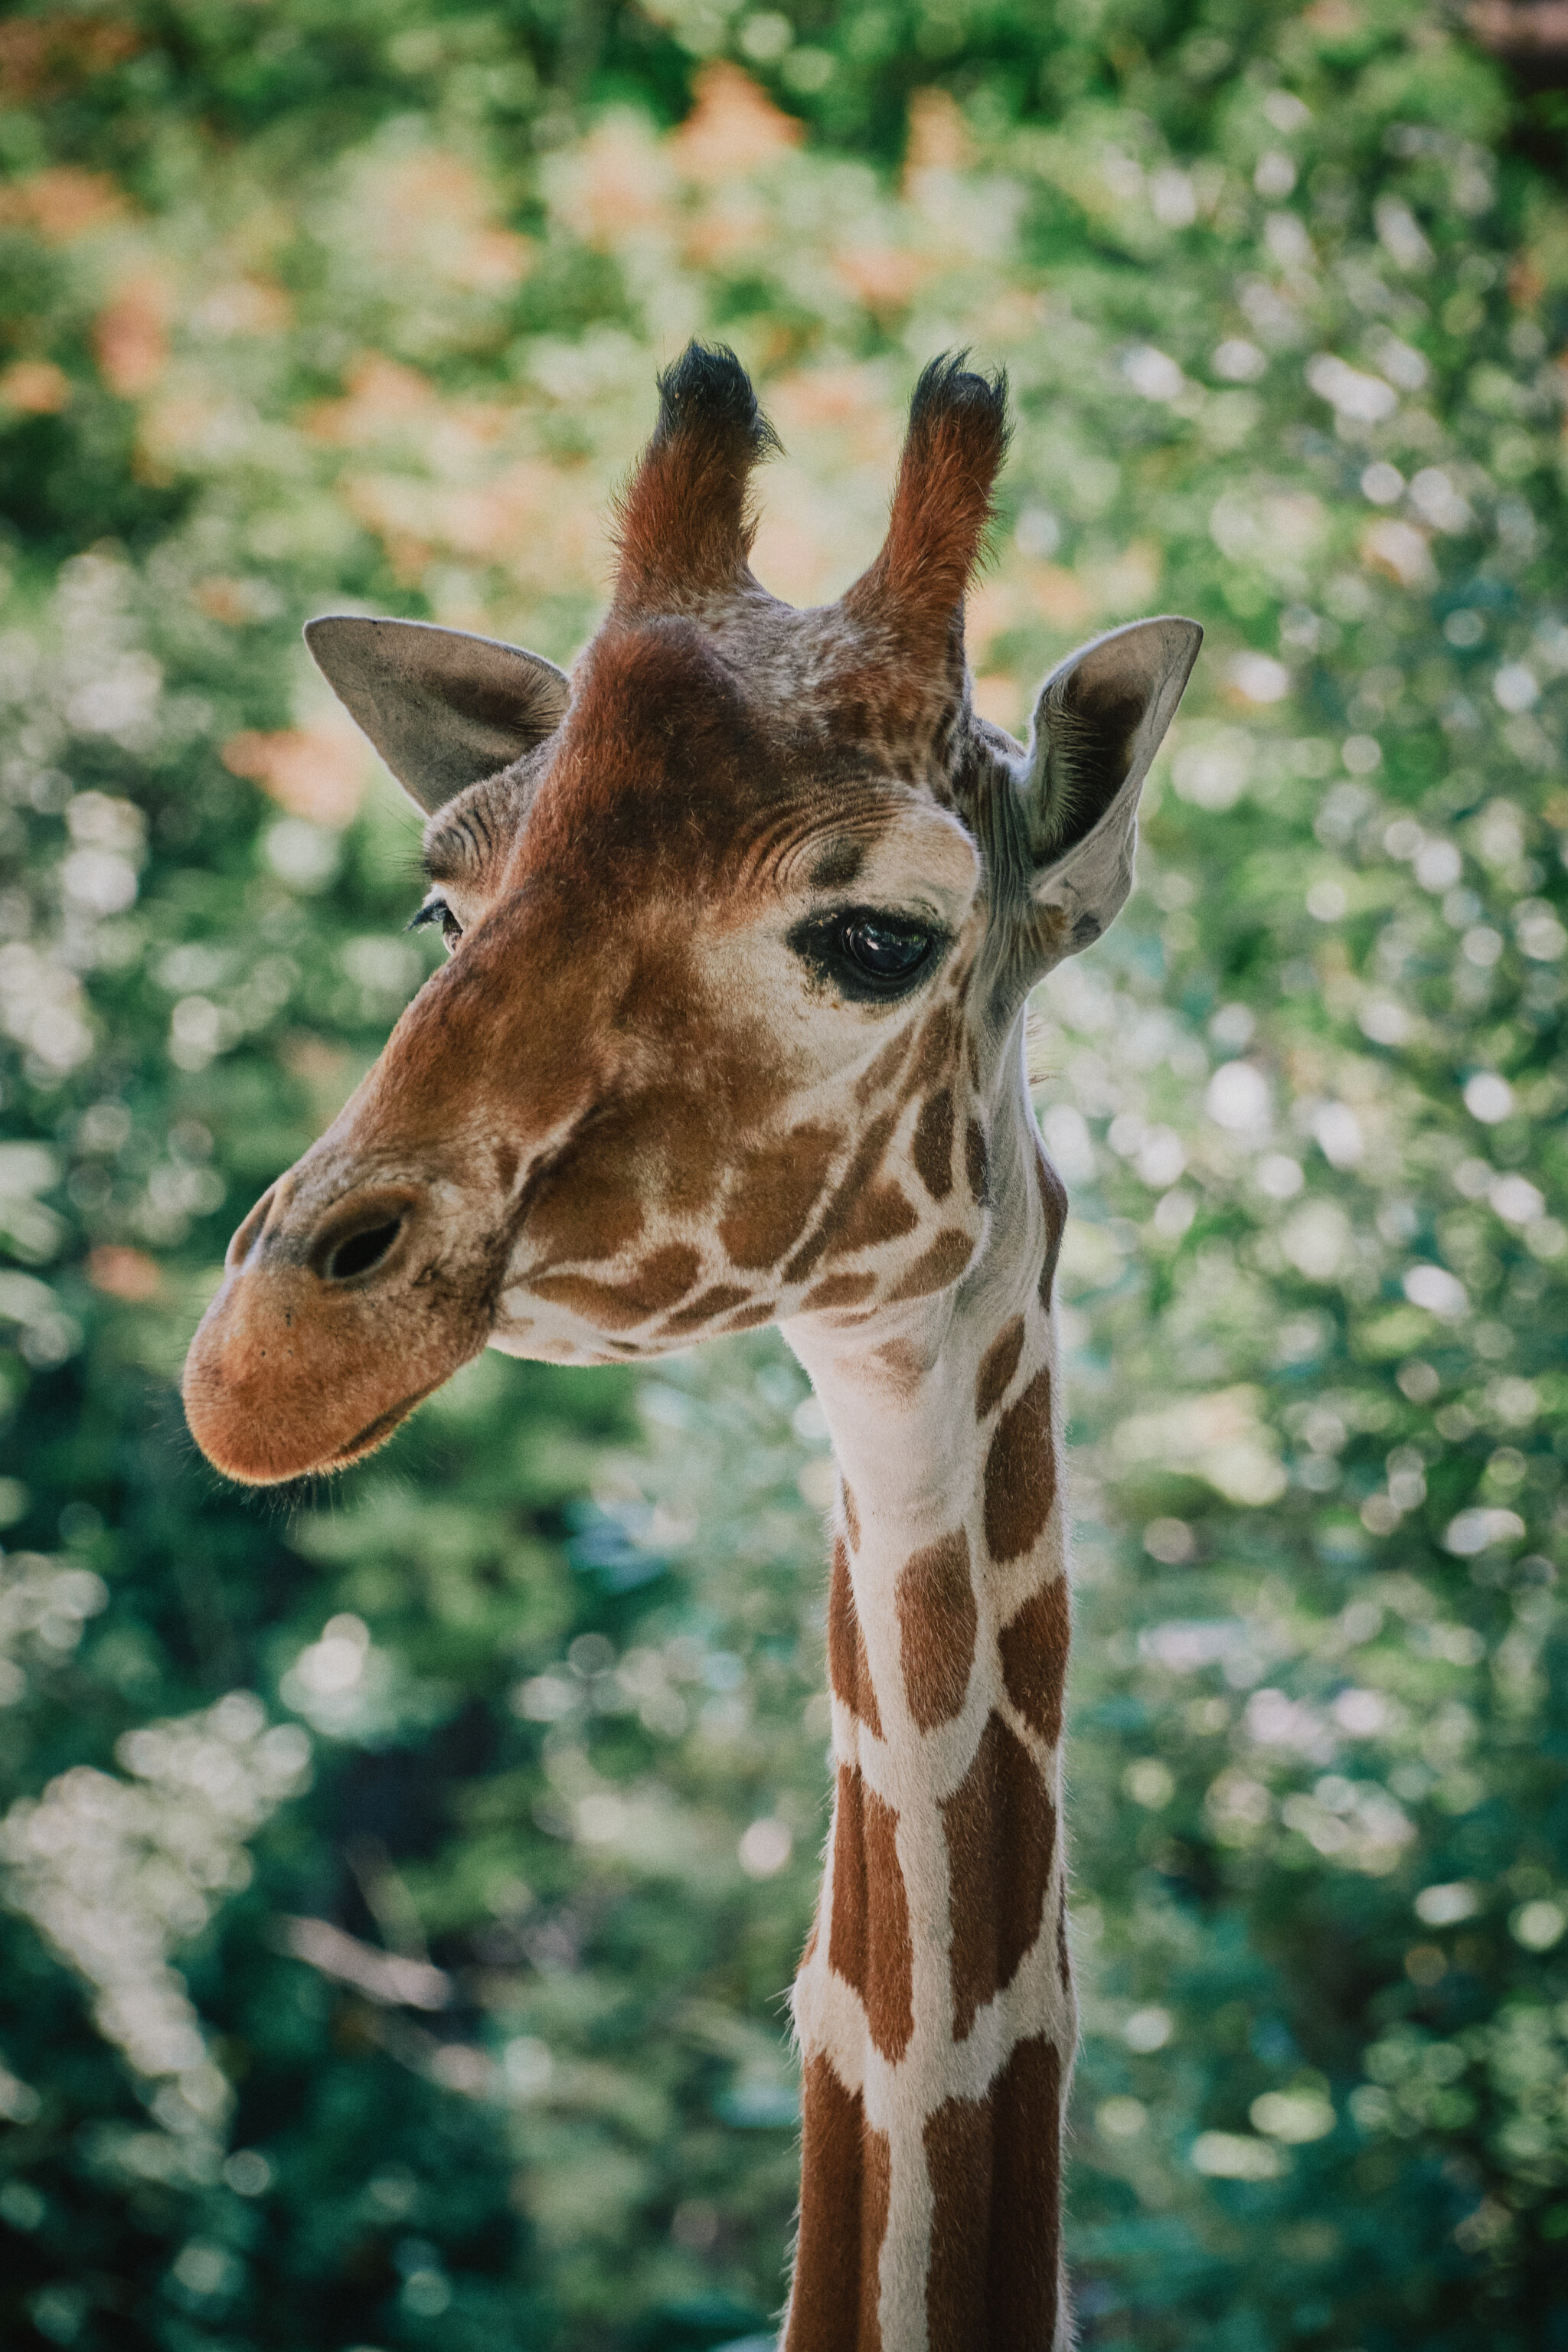 Somali giraffe